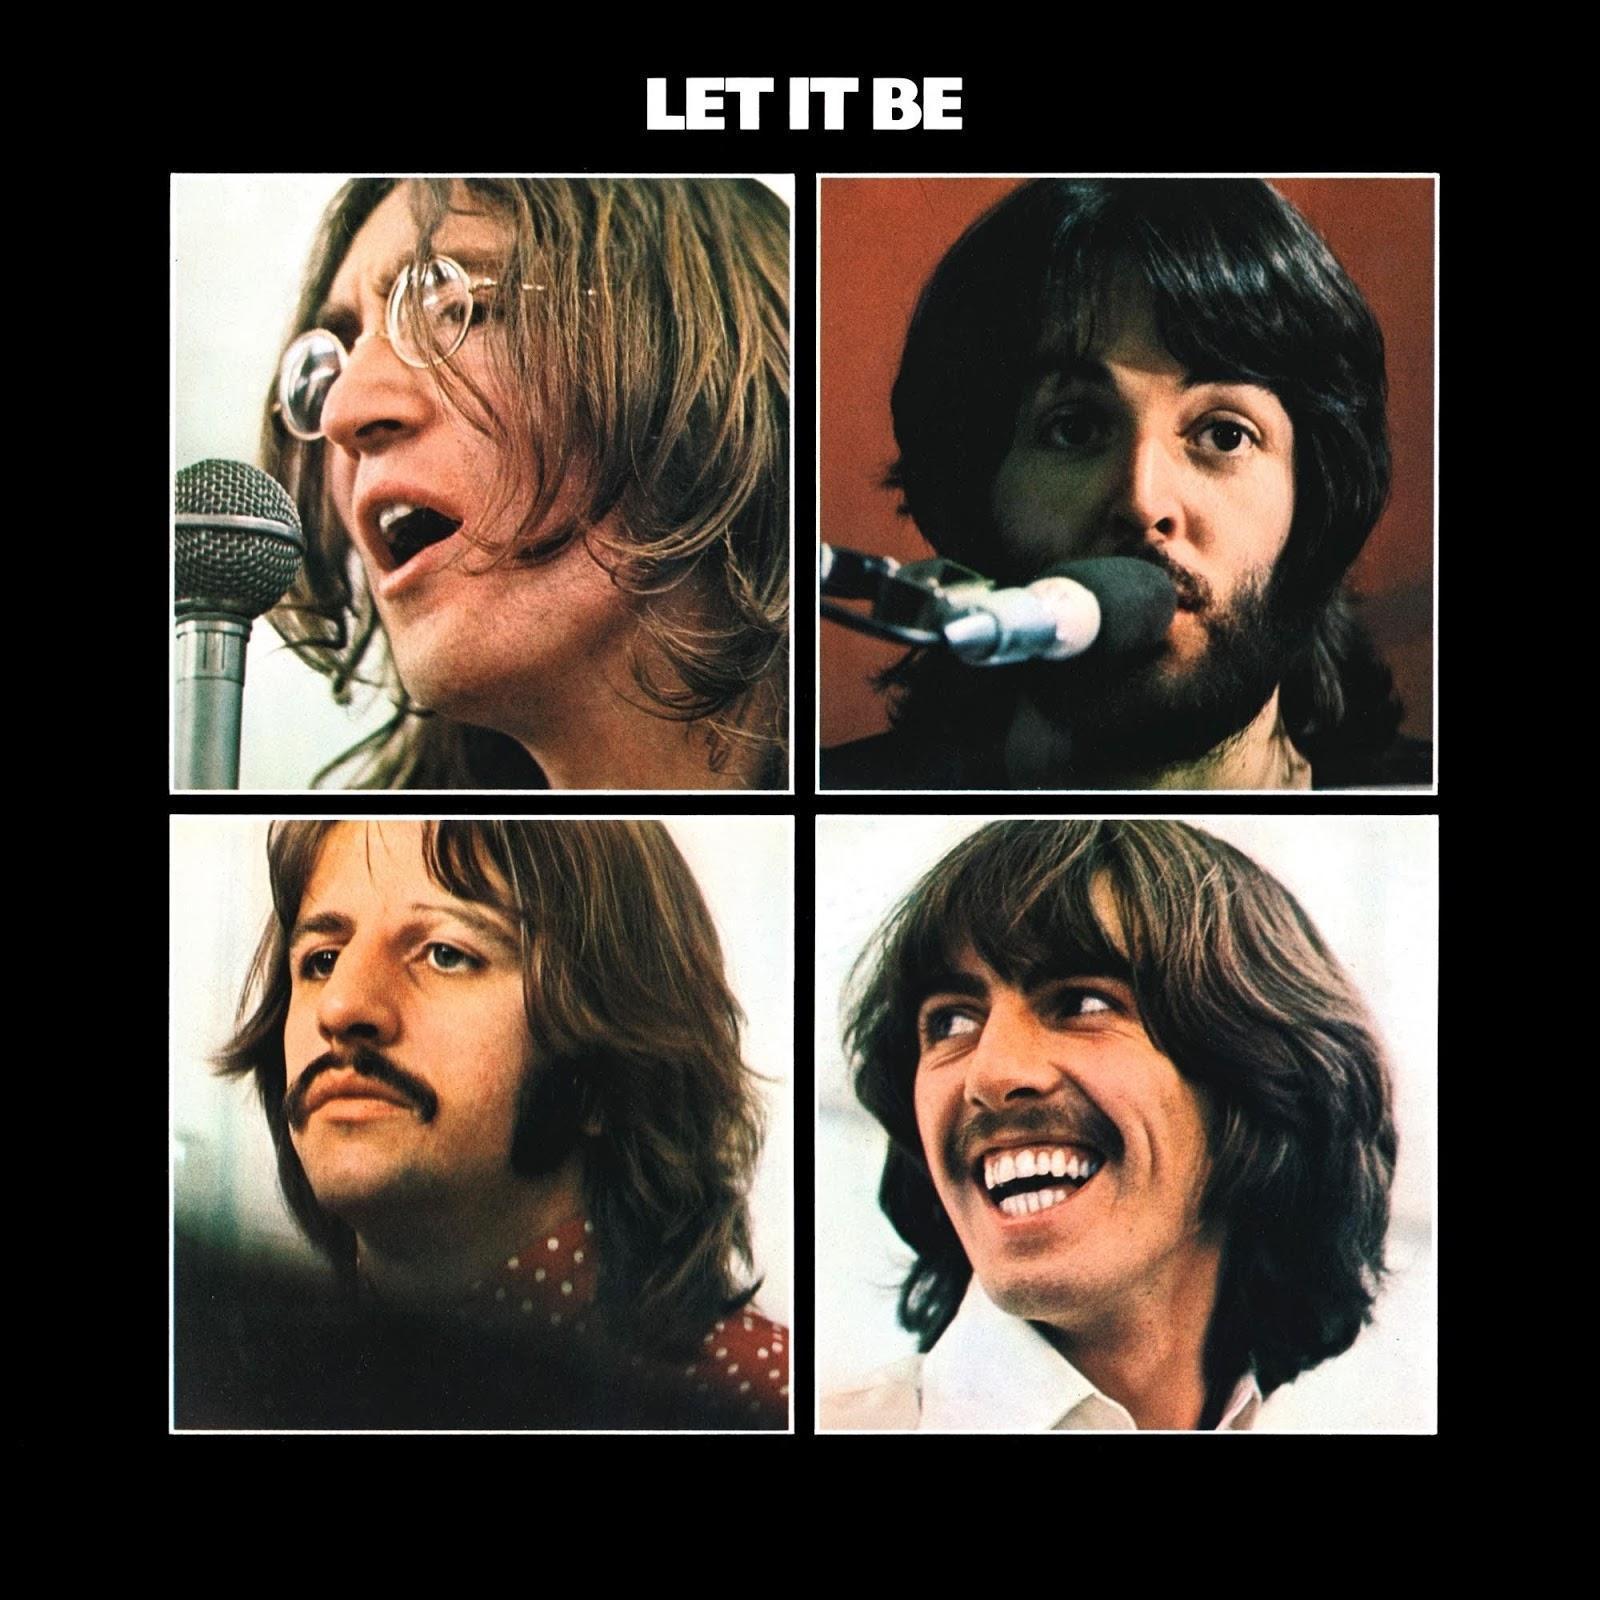 10. Let It Be (1970)